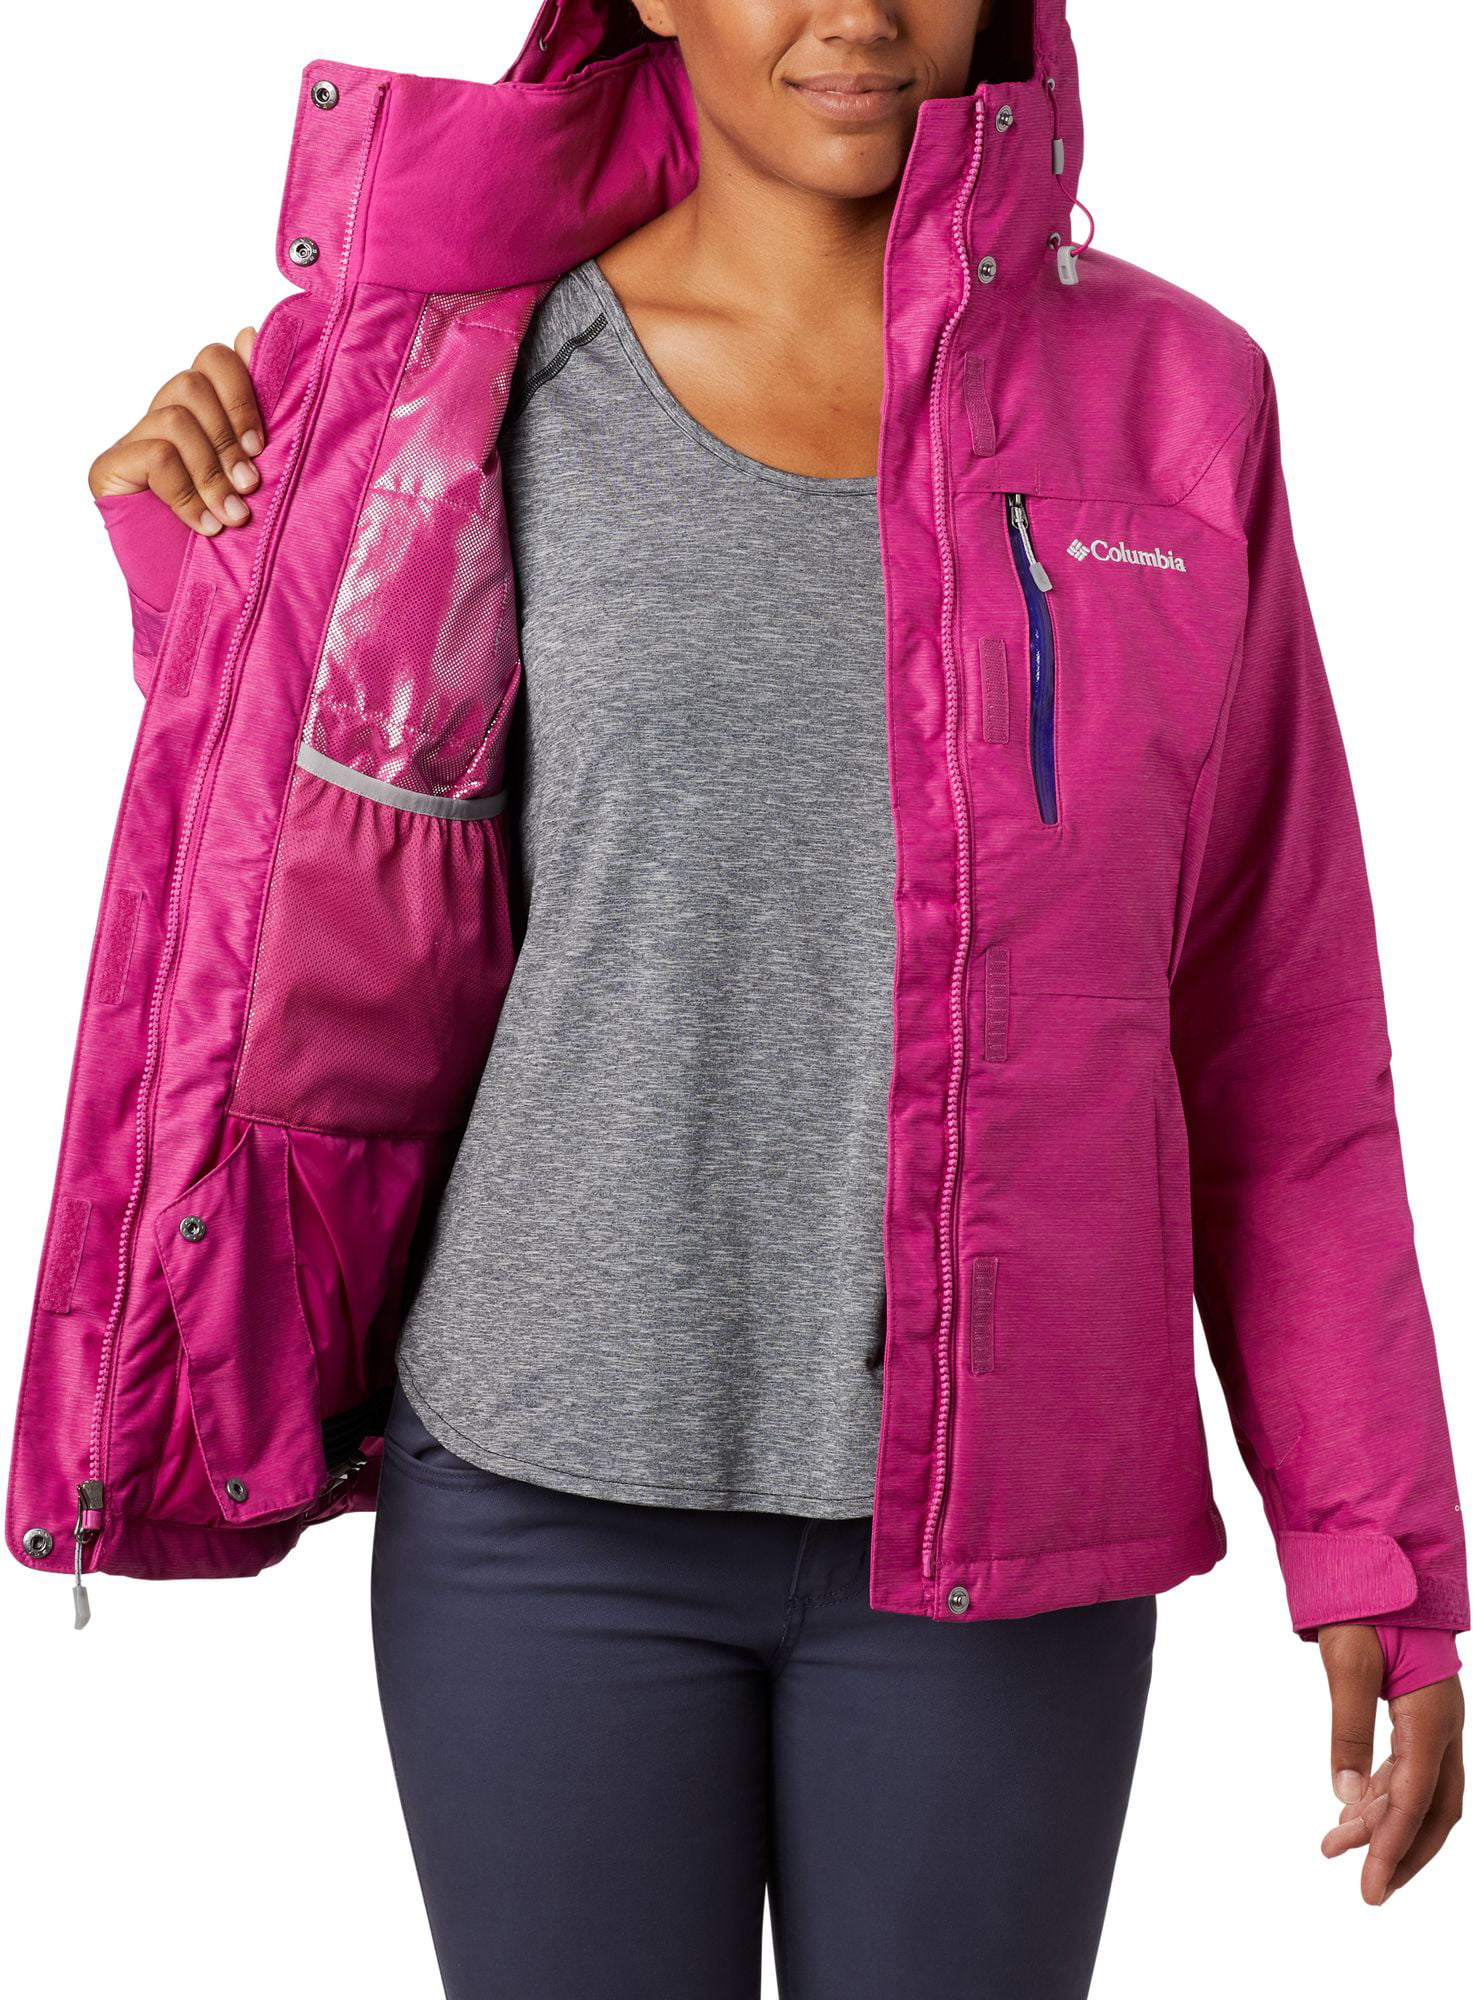 women's alpine omni heat jacket